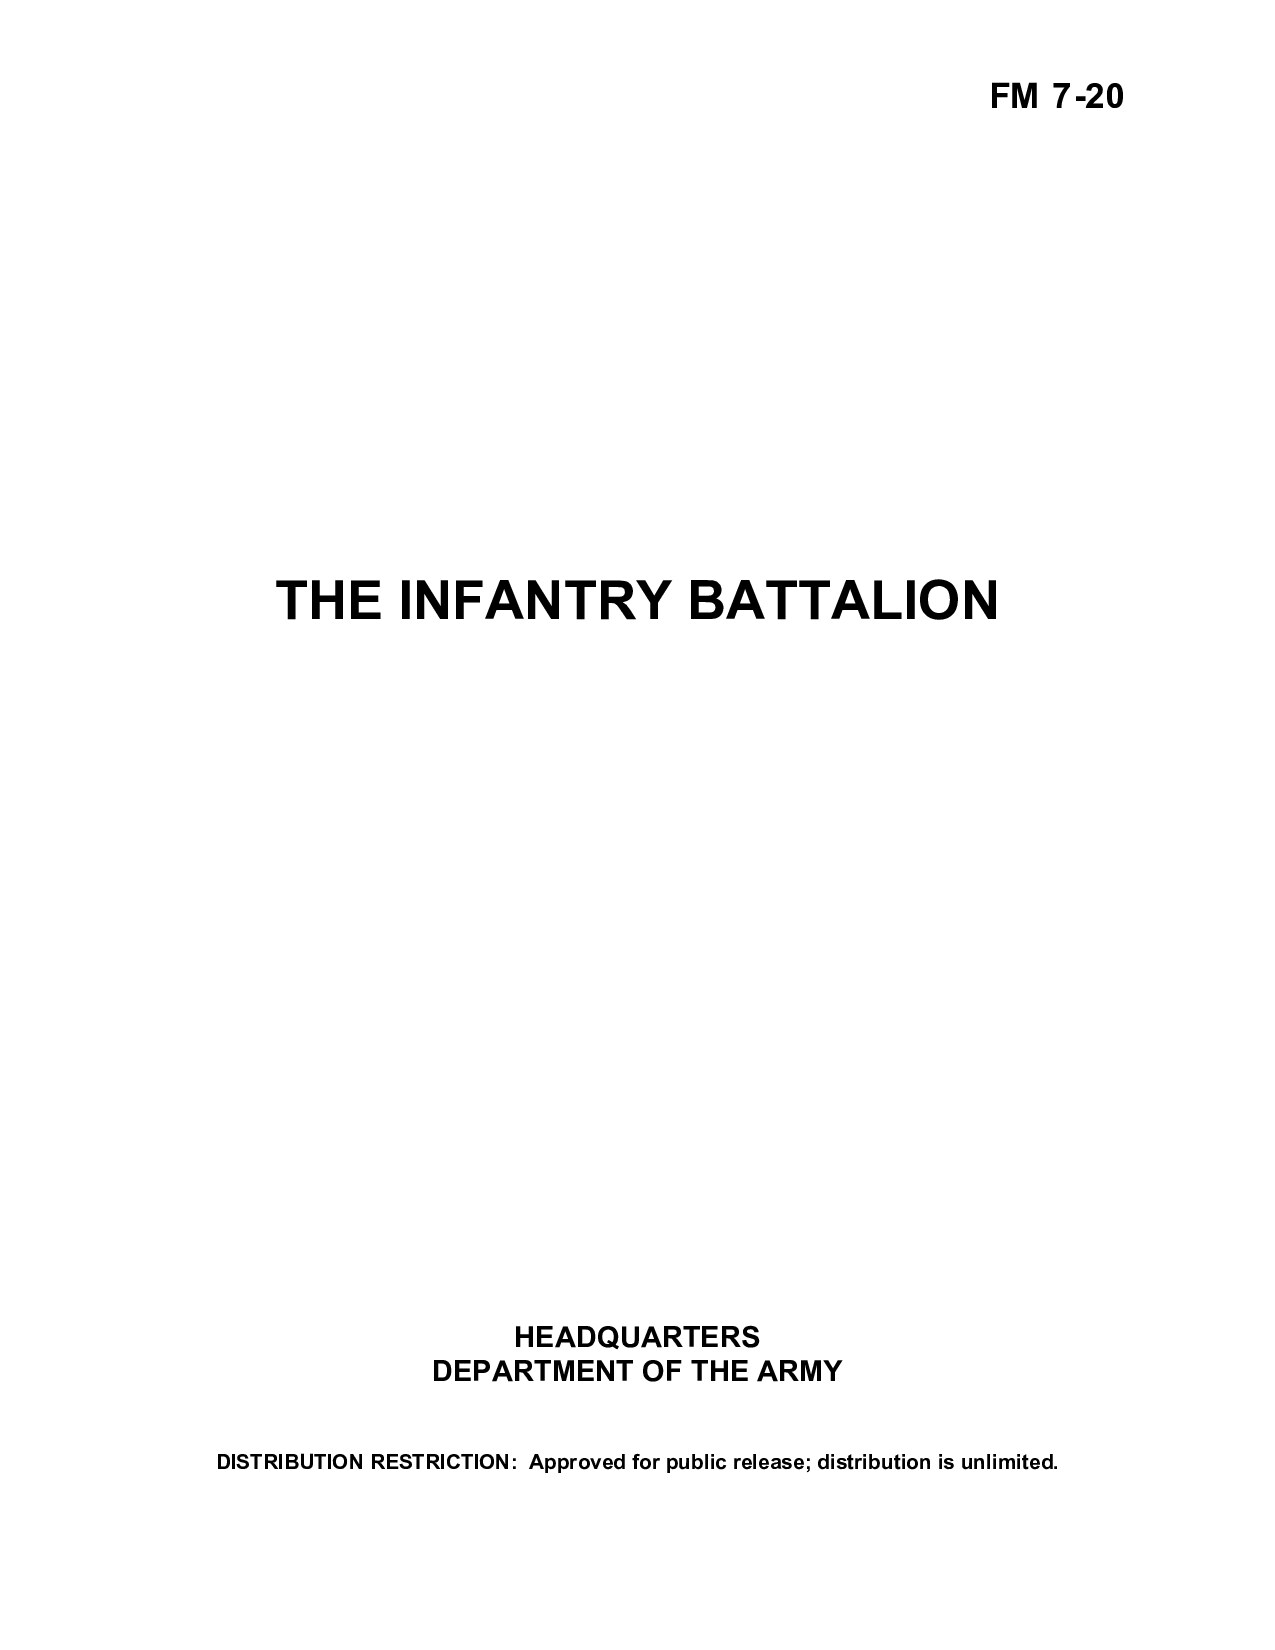 FM 7-20 The Infantry Battalion